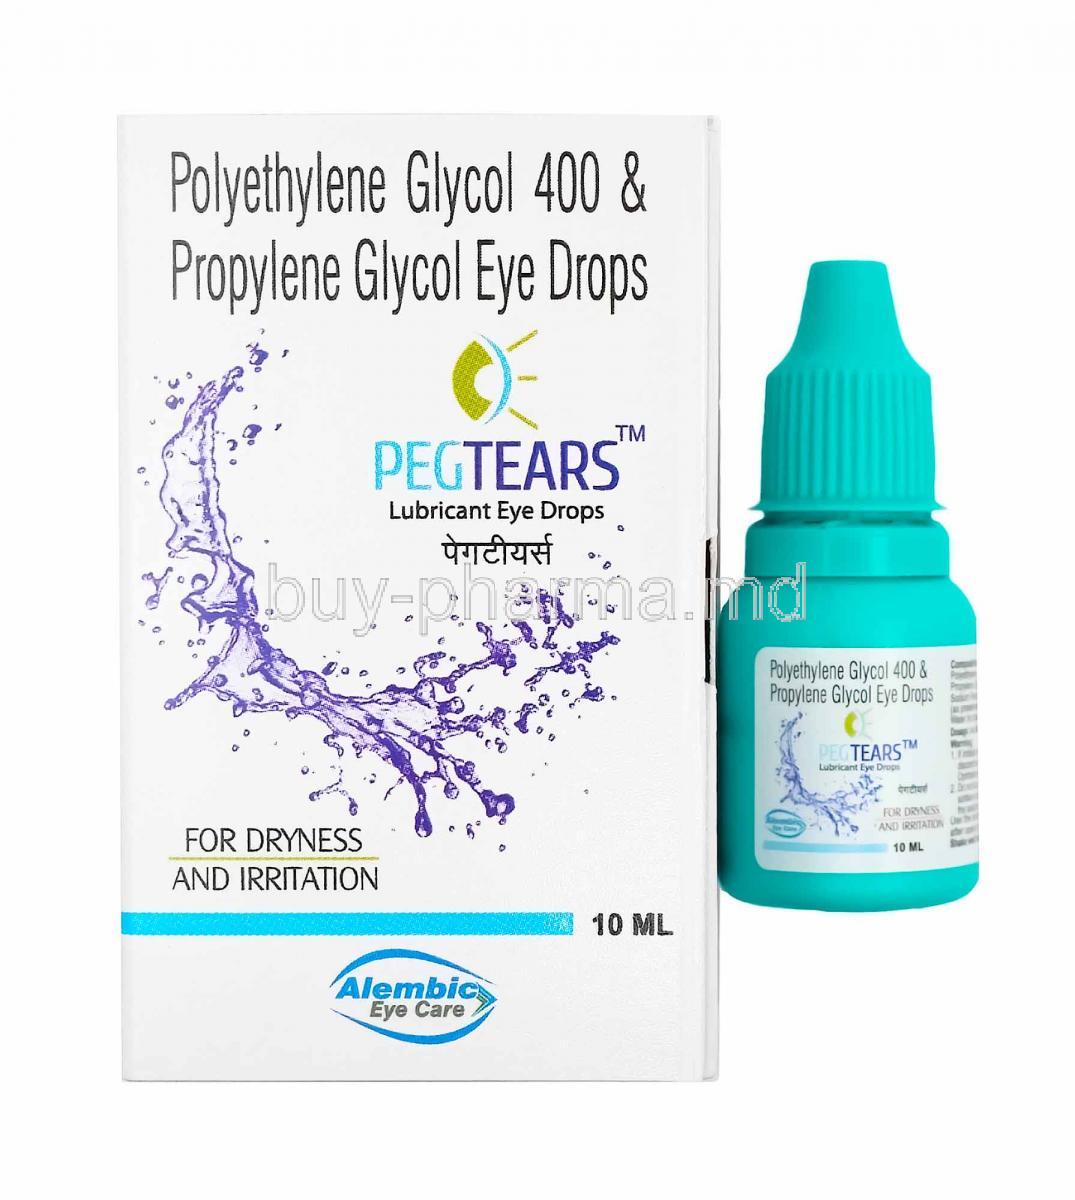 Pegtears Eye Drop, Polyethylene Glycol and Propylene Glycol